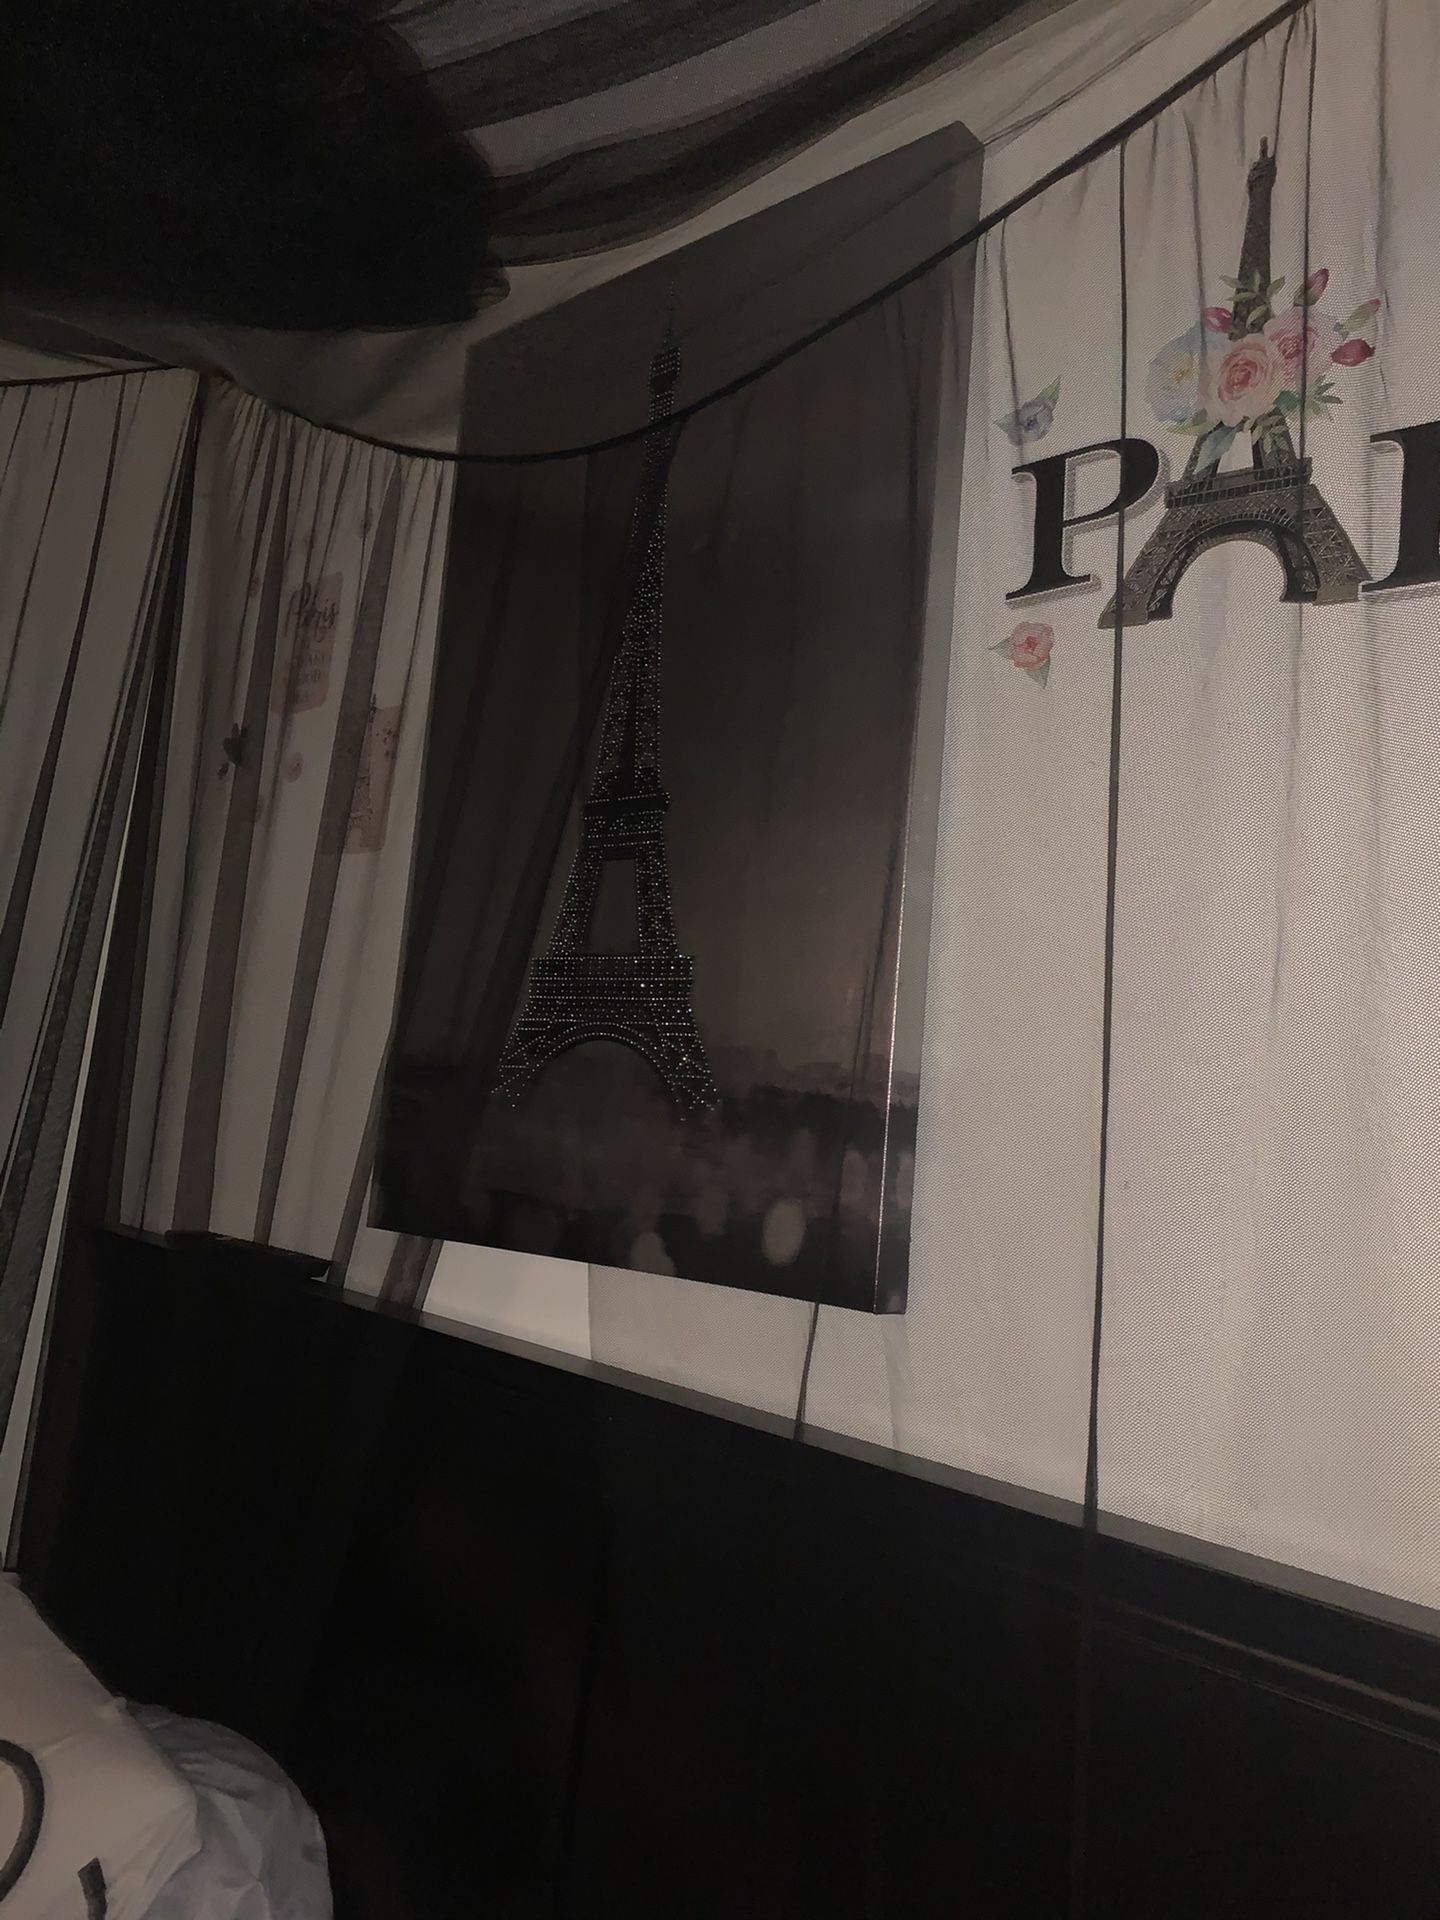 Paris decor Items Are Sold Separately